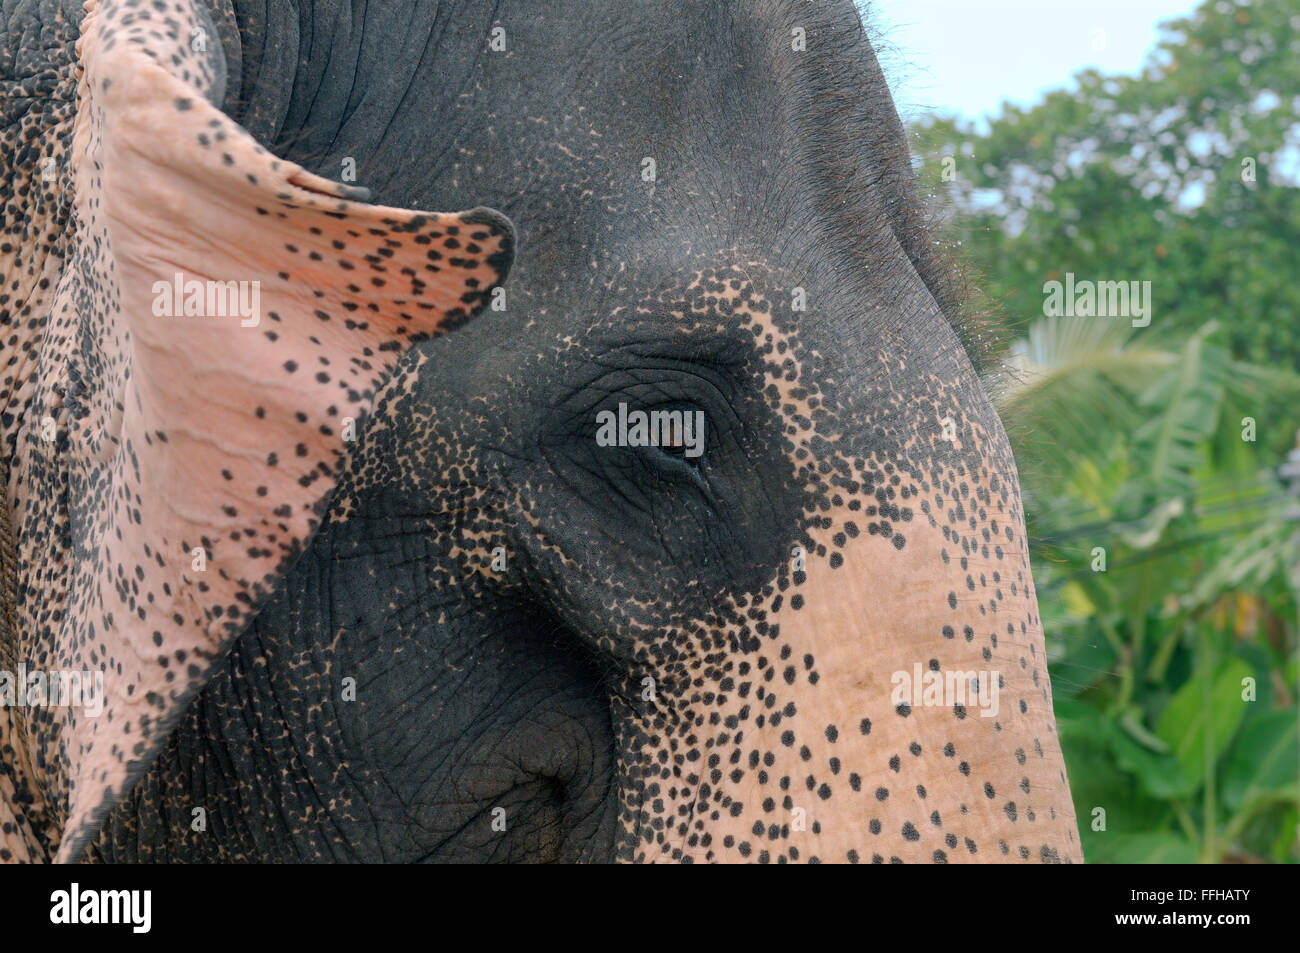 Retrato de elefante indio, el elefante asiático o el elefante asiático (Elephas maximus), Hikkaduwa, Sri Lanka, el sur de Asia Foto de stock